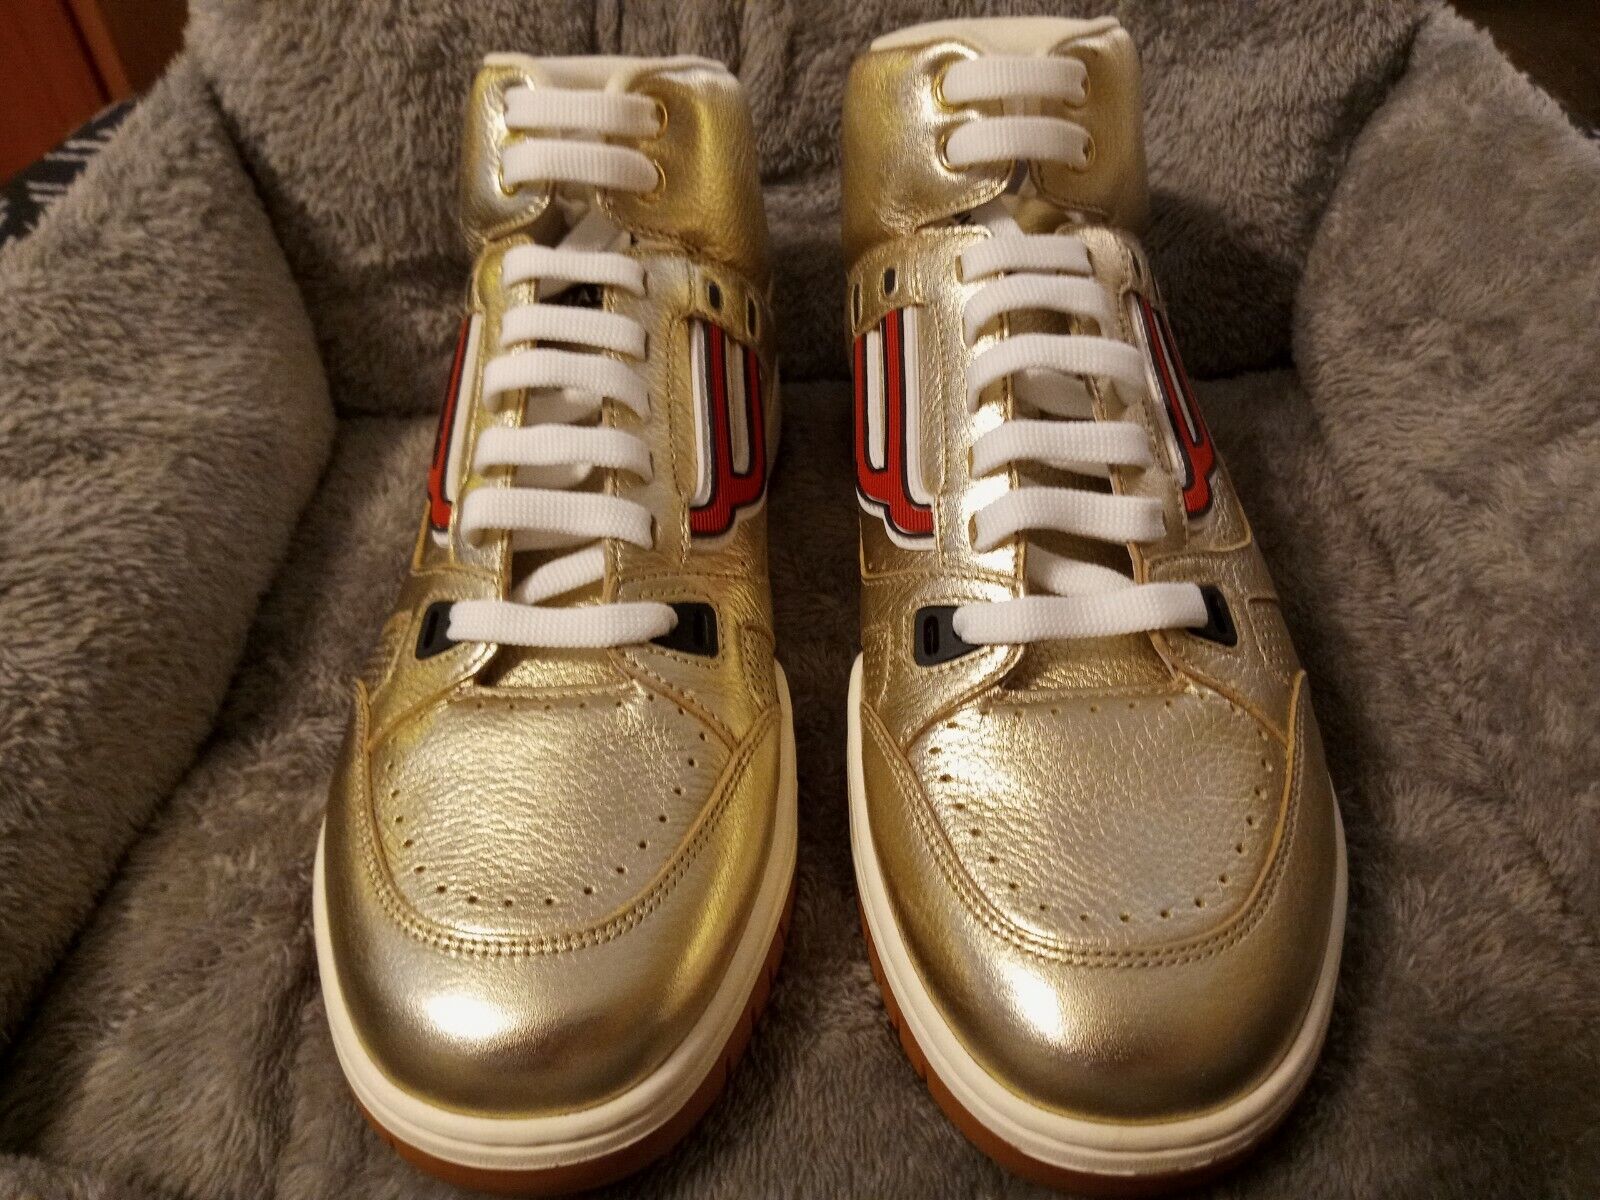 Bally Men\'s Sneakers gold size 10 $595 retail